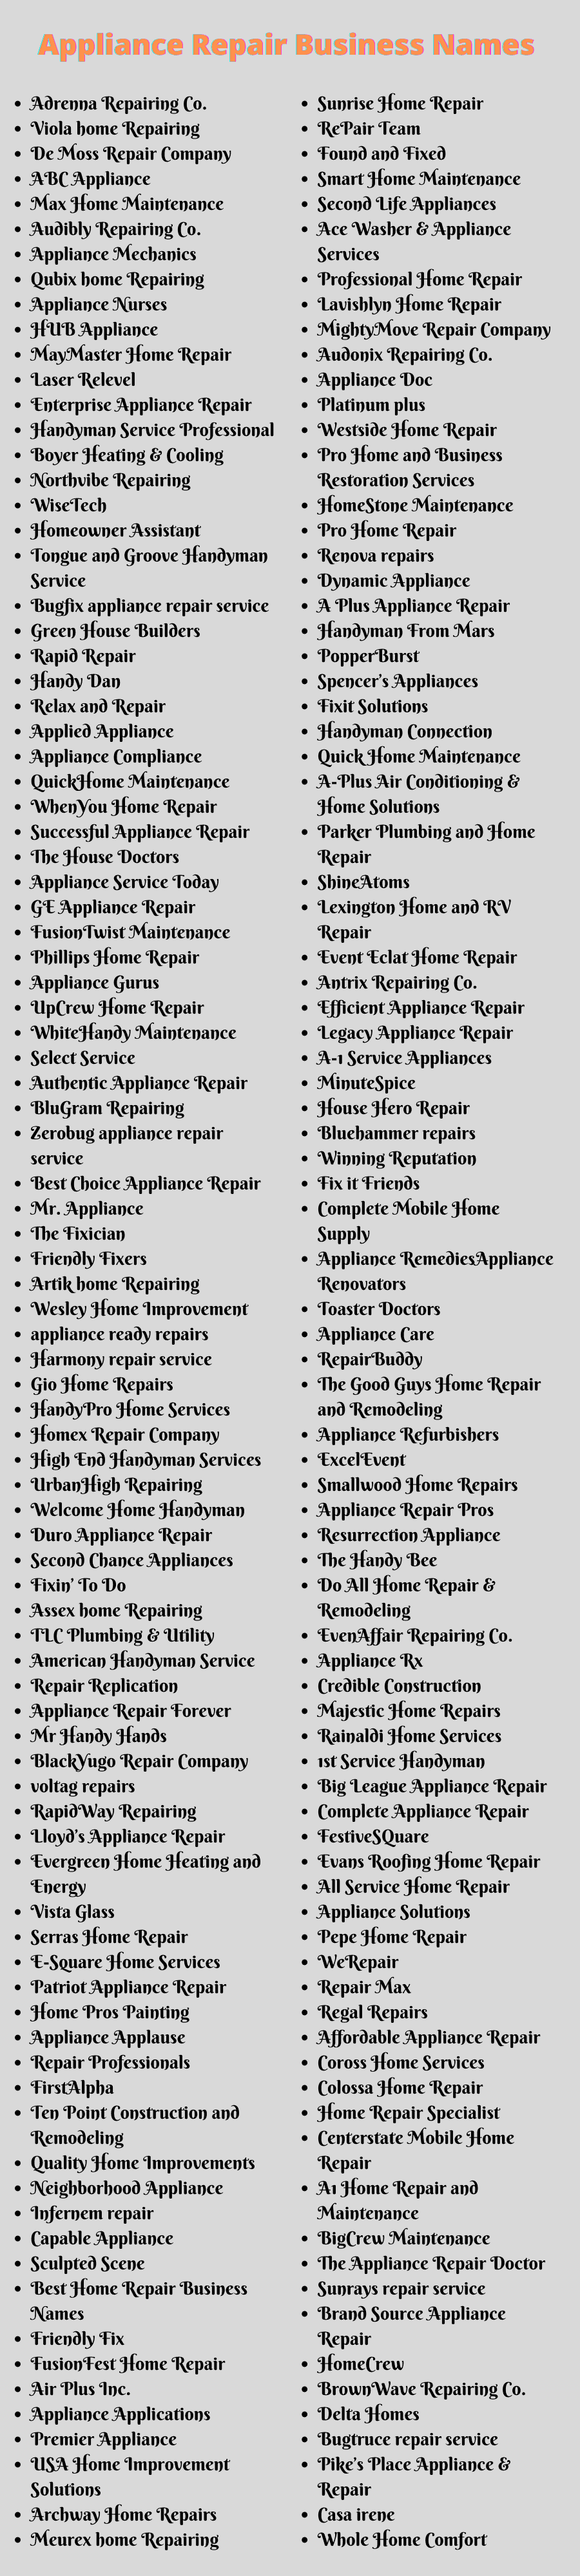 Appliance Repair Business Names